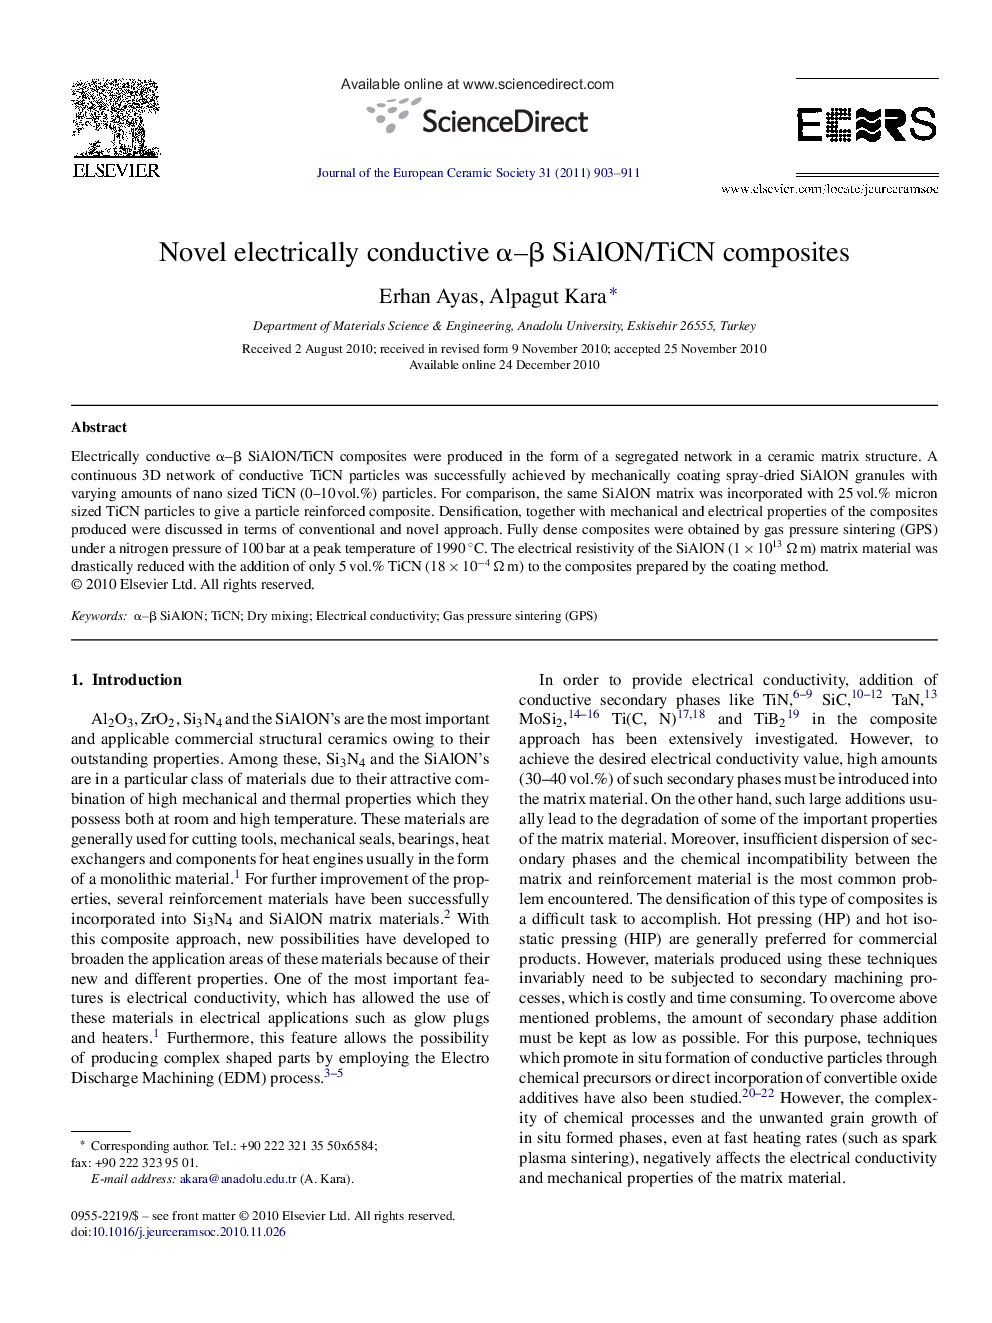 Novel electrically conductive Î±-Î² SiAlON/TiCN composites